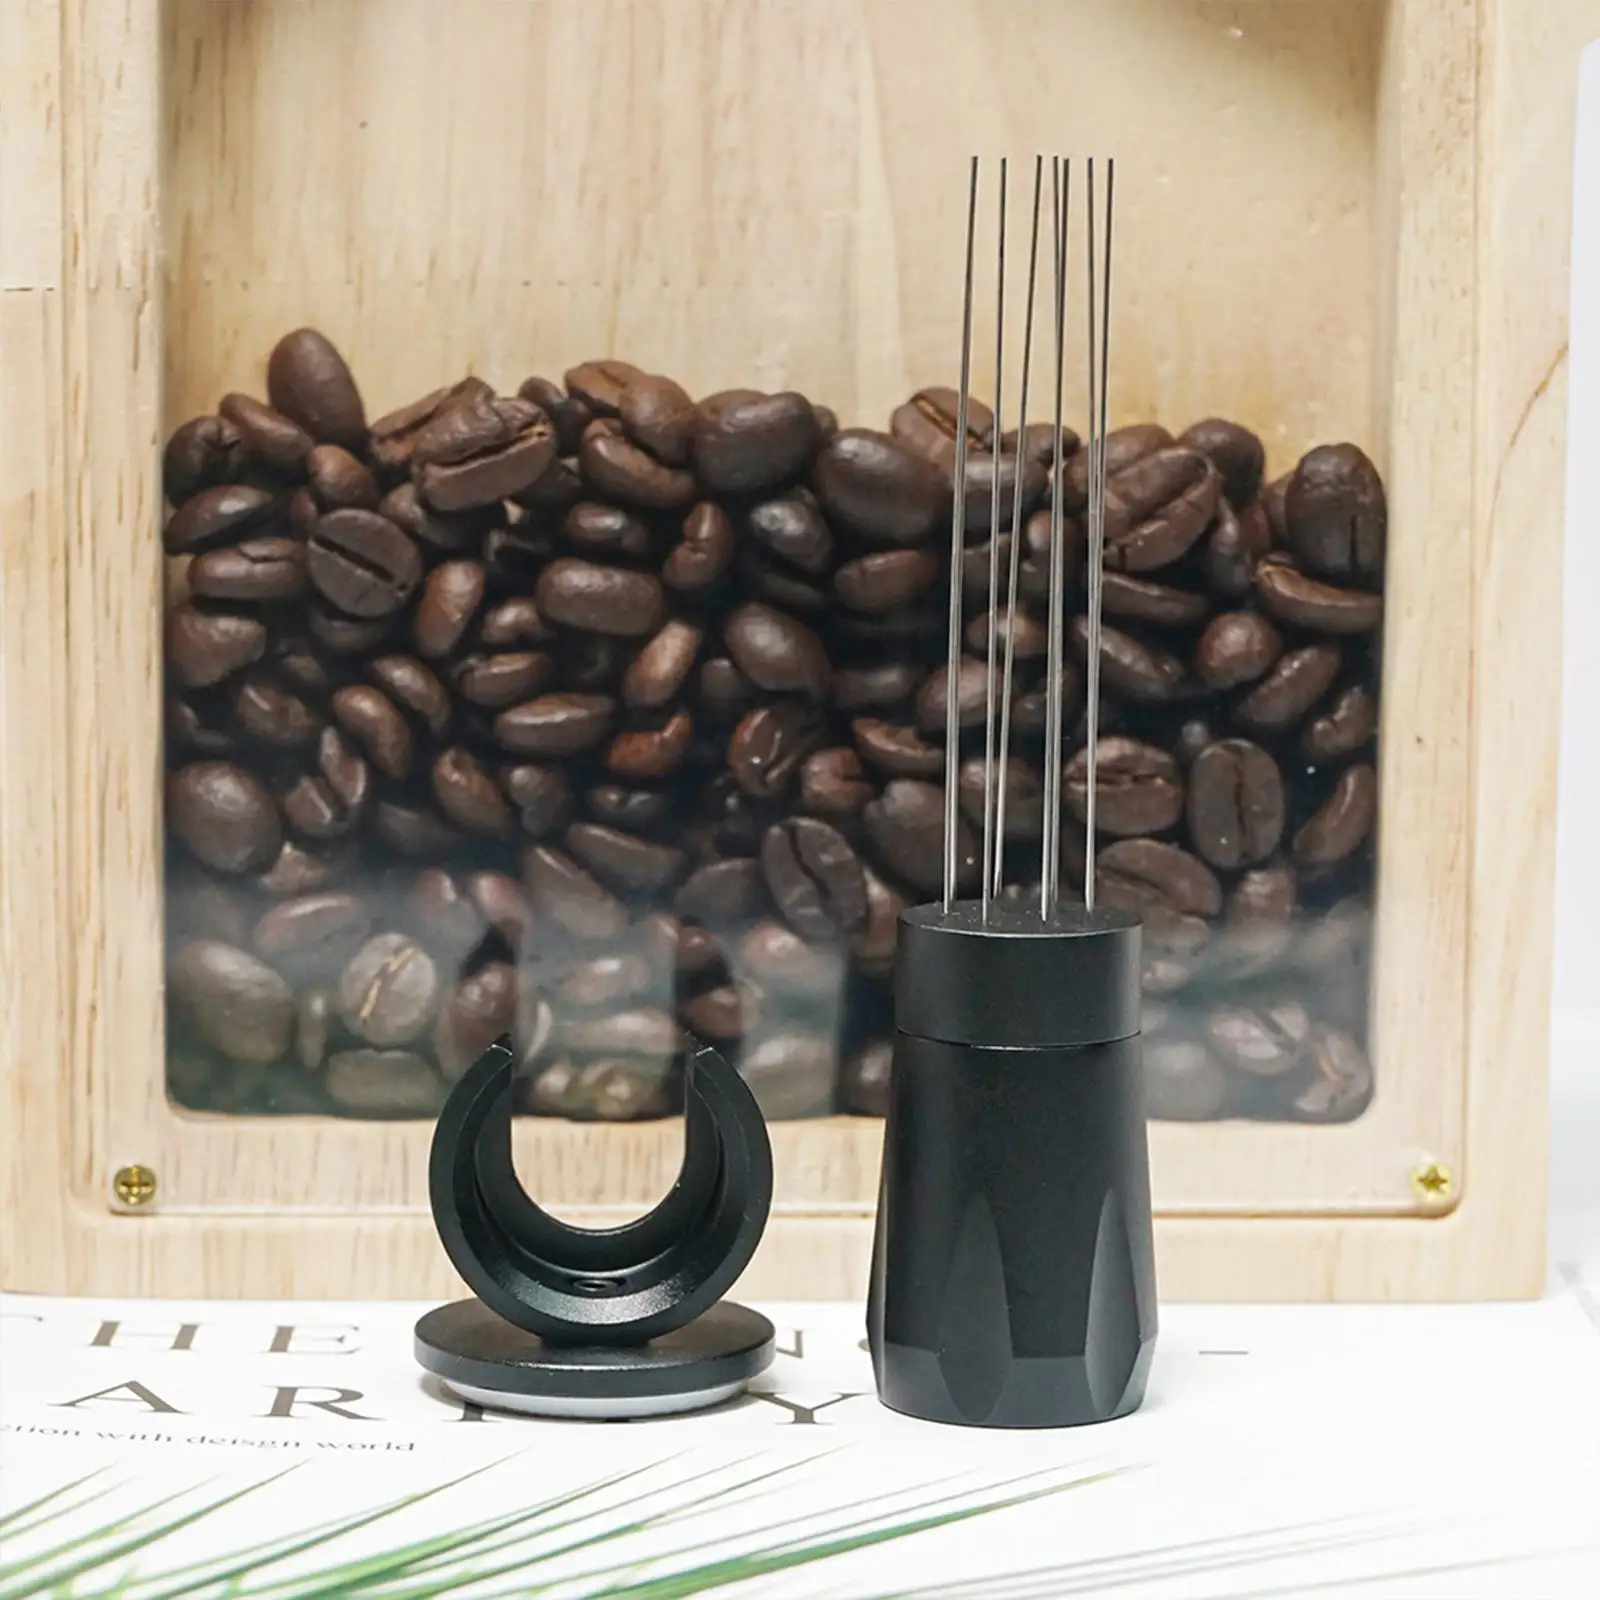 Coffee Tamper Distributor Espresso Tamper Distribution Leveler Tool Professional Espresso Distribution Tool for Home Travel